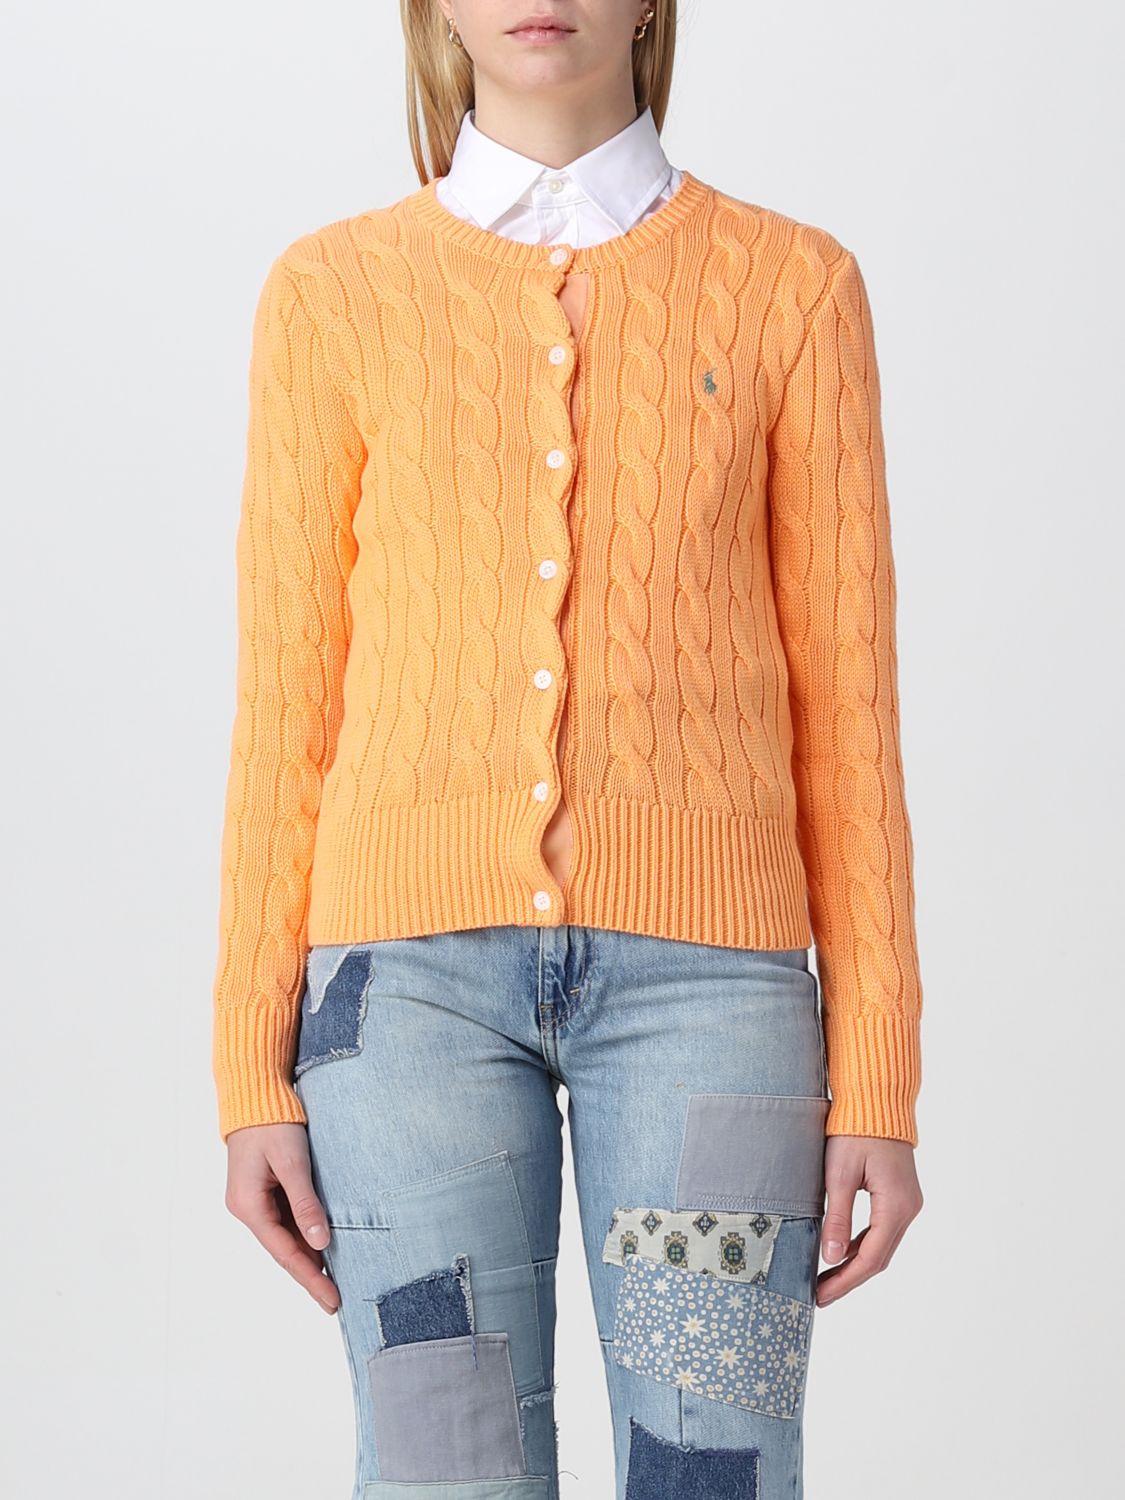 POLO RALPH LAUREN: cardigan for women - Orange | Polo Ralph Lauren cardigan  211891643 online on 